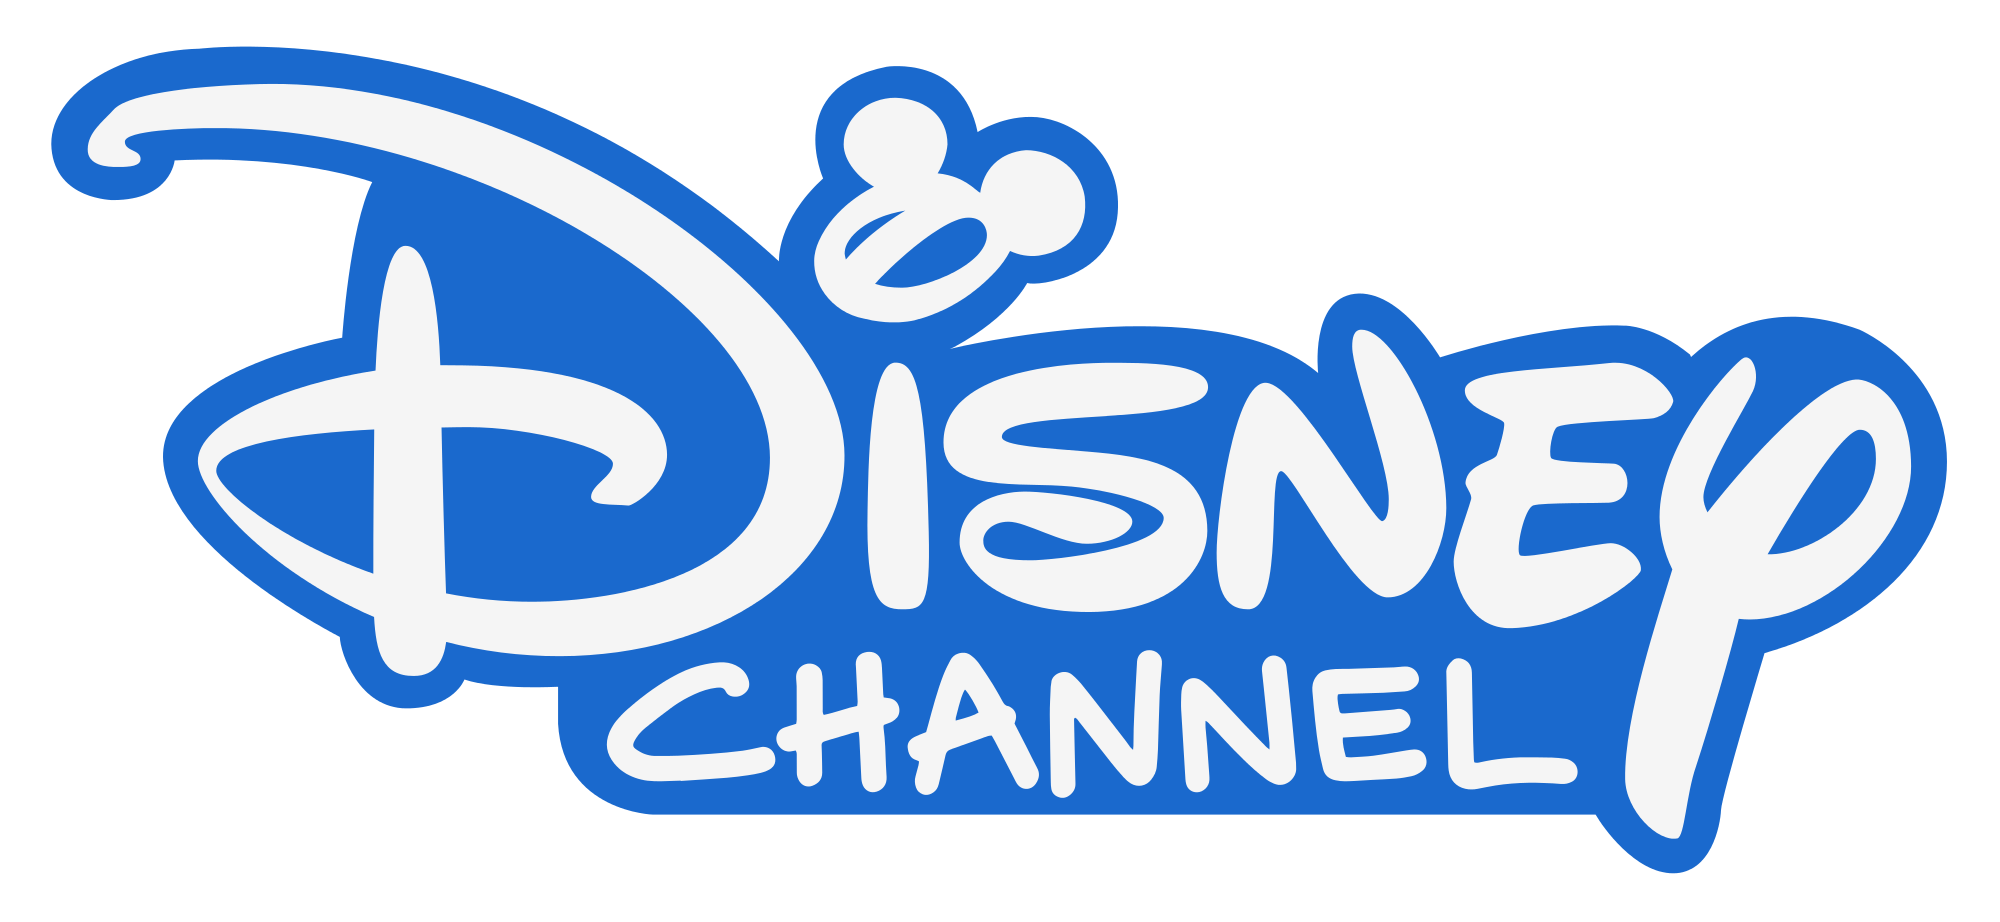 2015 Disney Channel Logo - Disney Channel logo.svg.png. ICHC Channel